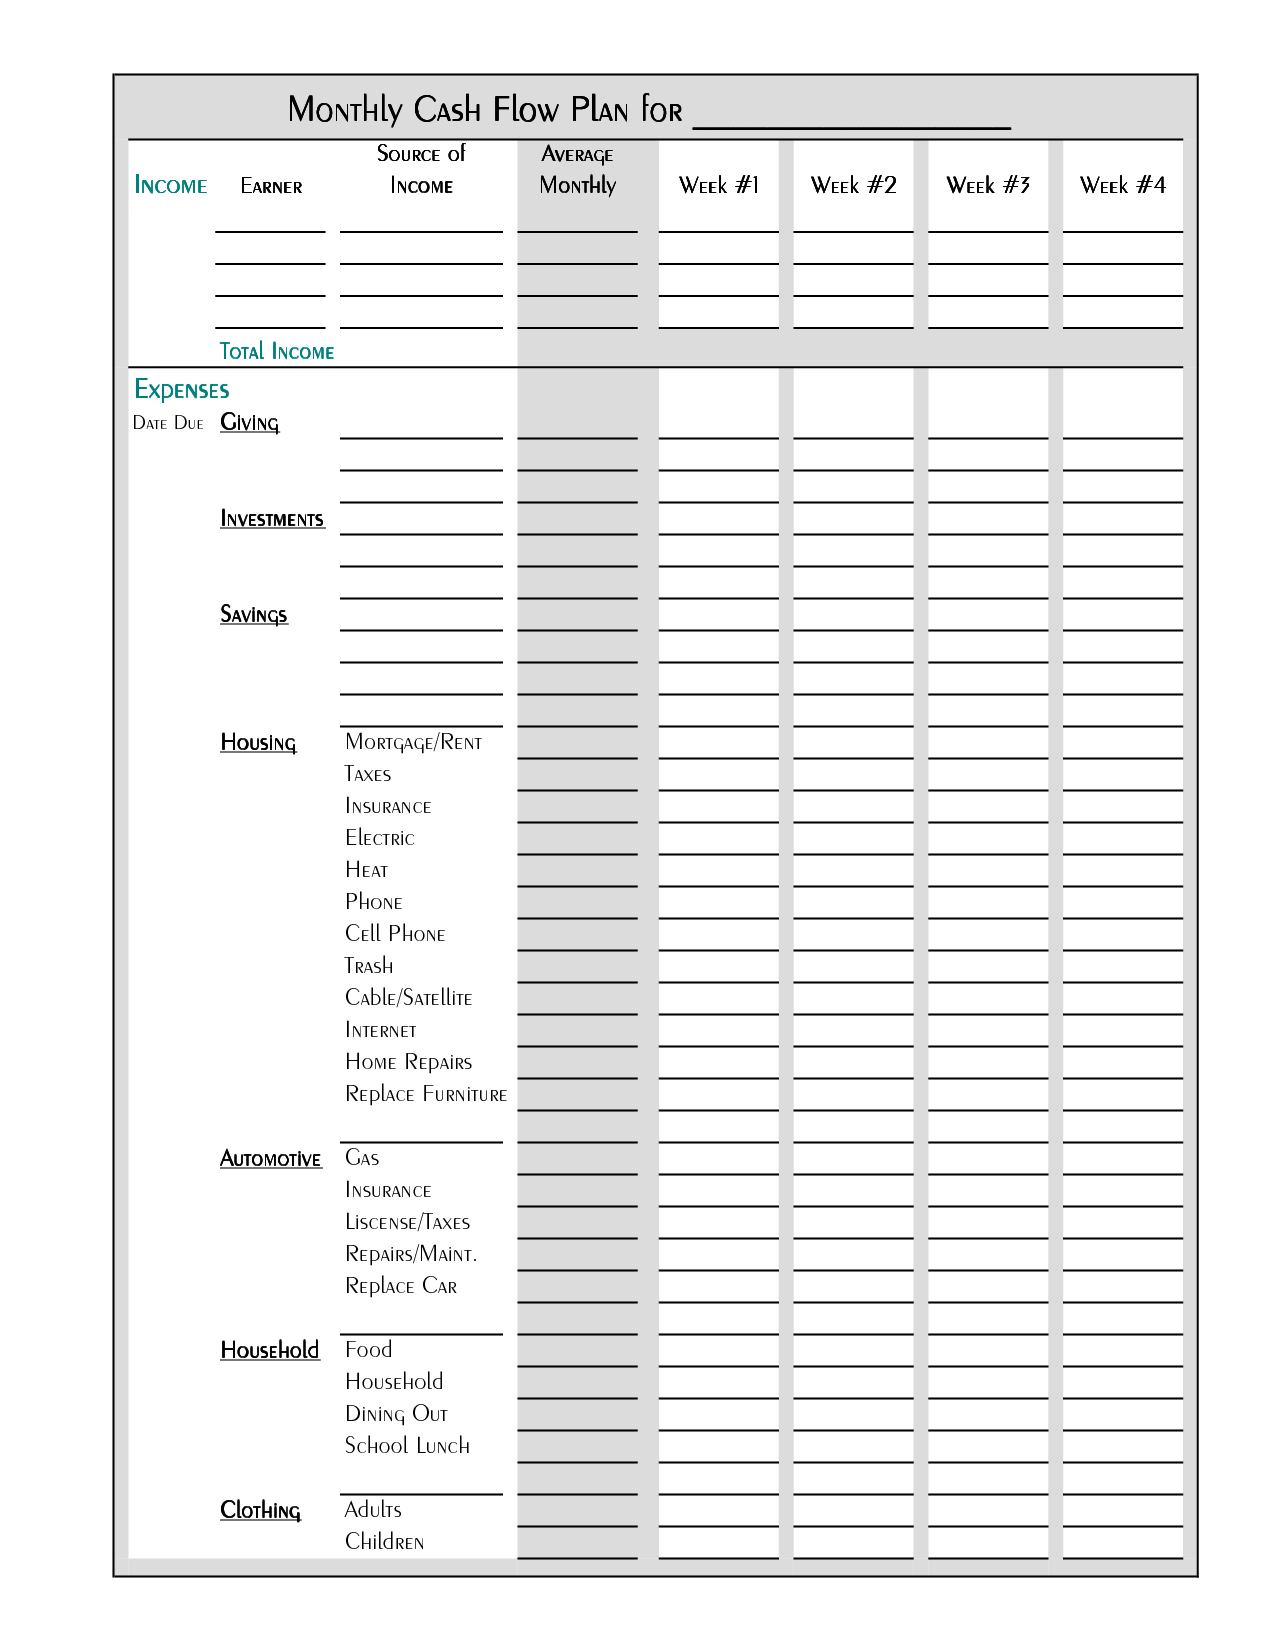 Free Printable Budget Worksheet Template Image